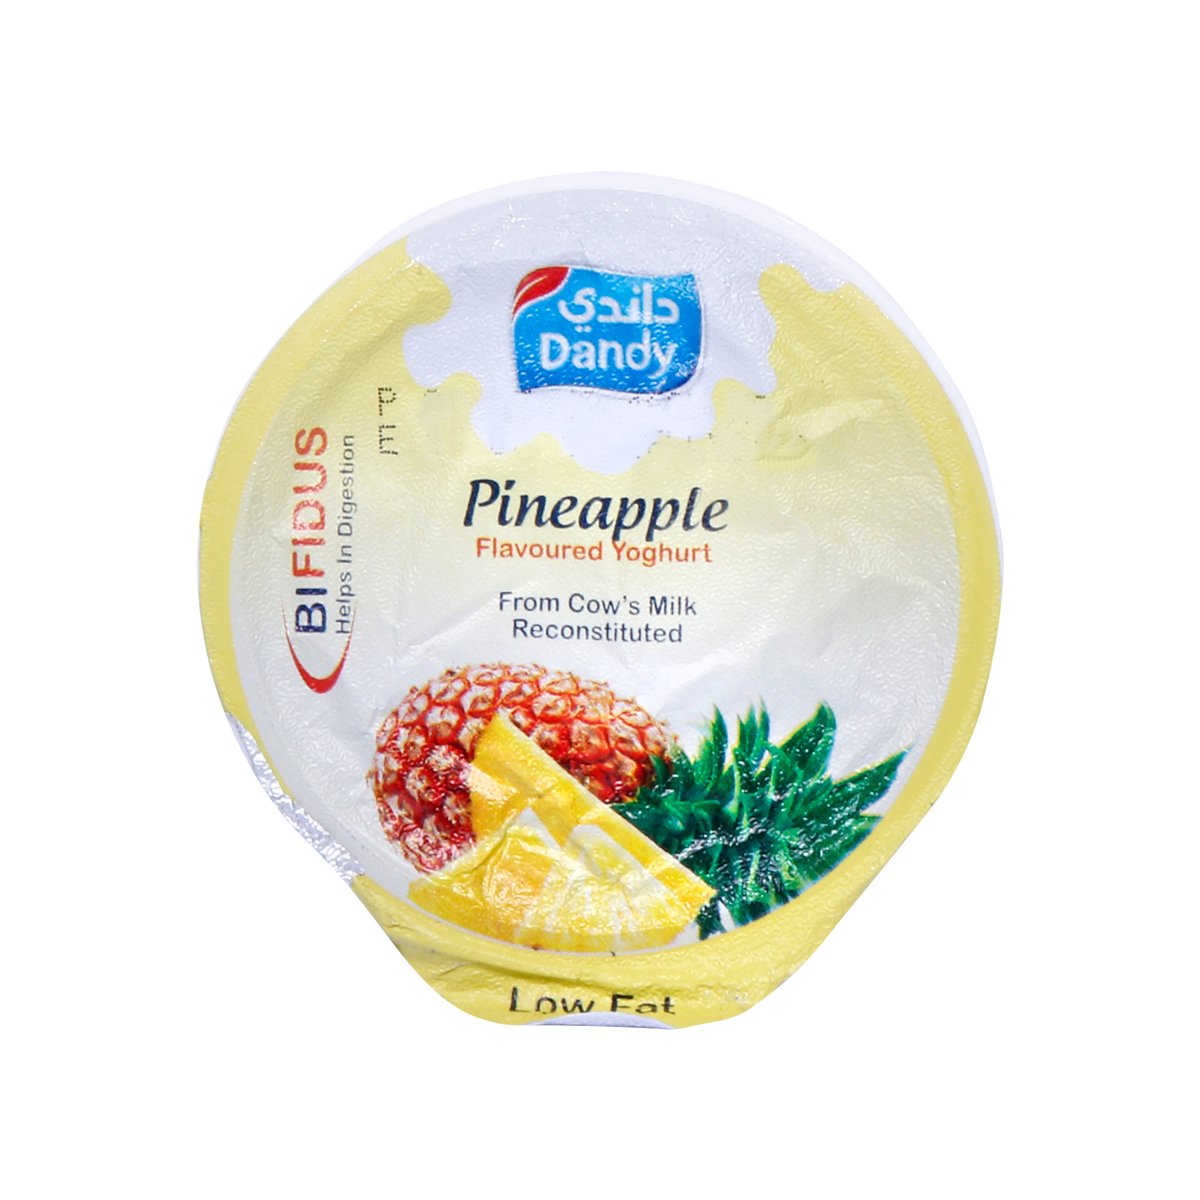 Dandy Pineapple Flavoured Yoghurt 120g